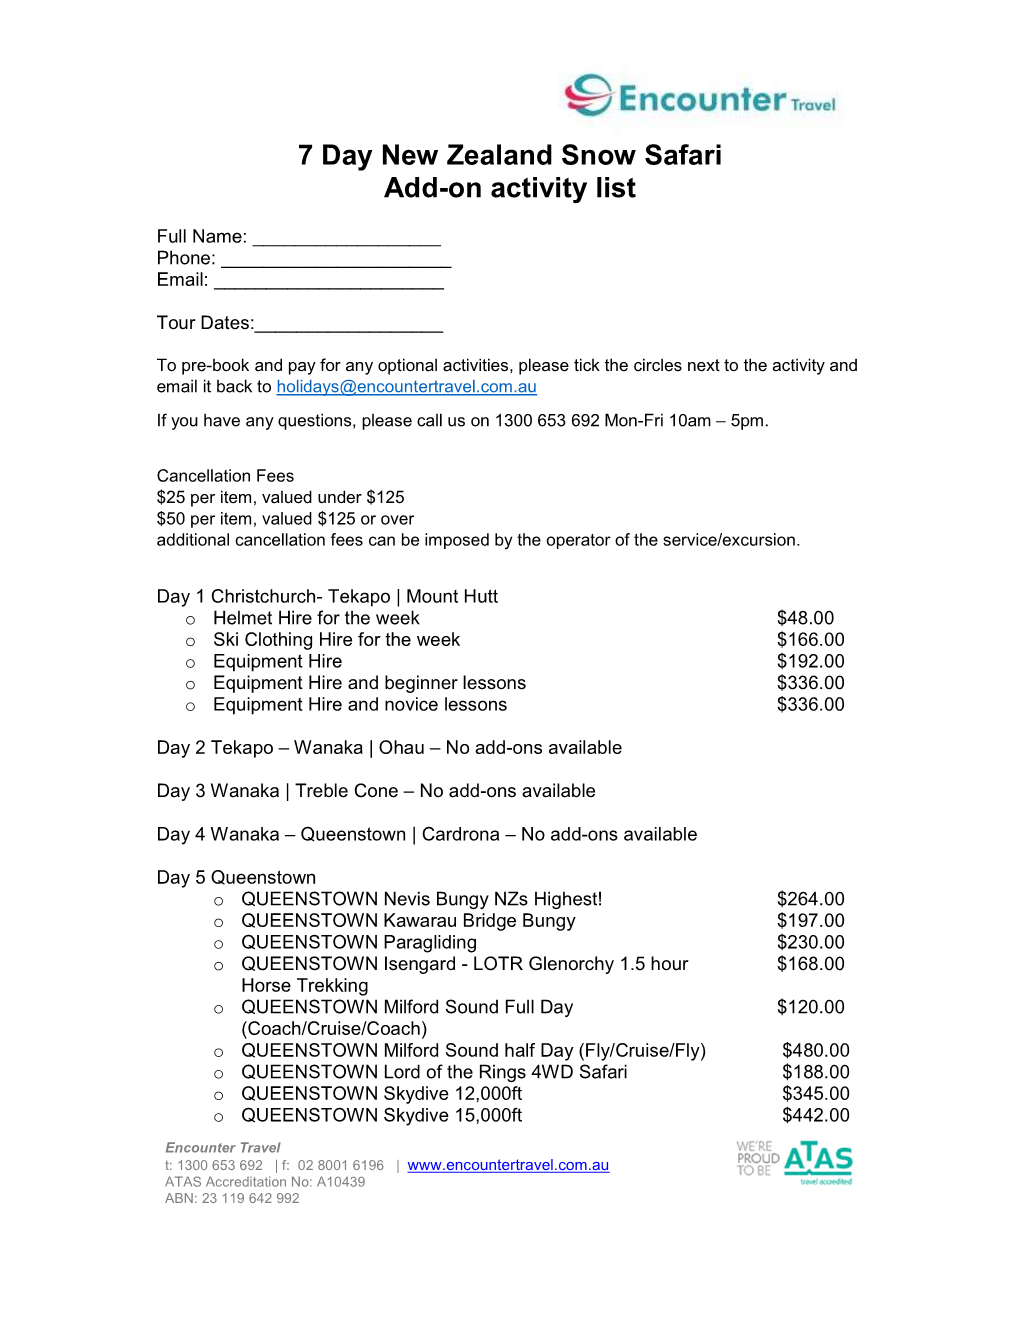 7 Day New Zealand Snow Safari Add-On Activity List